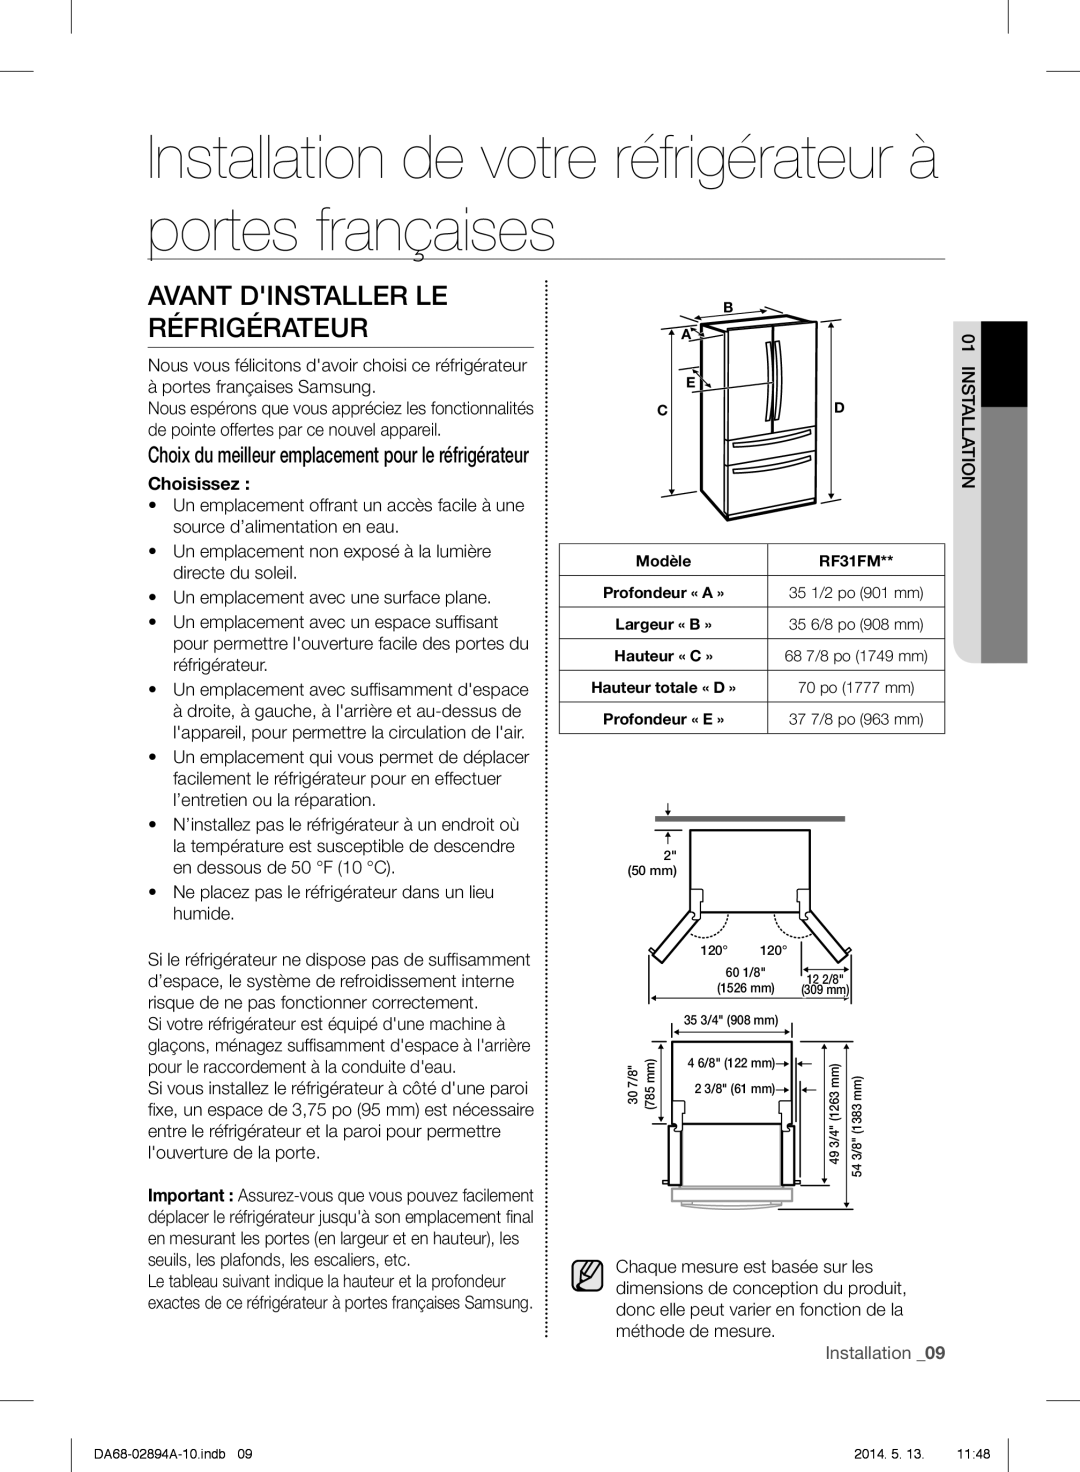 Samsung RF31FMESBSR user manual Avant Dinstaller Le Réfrigérateur, Installation _09, Choisissez 